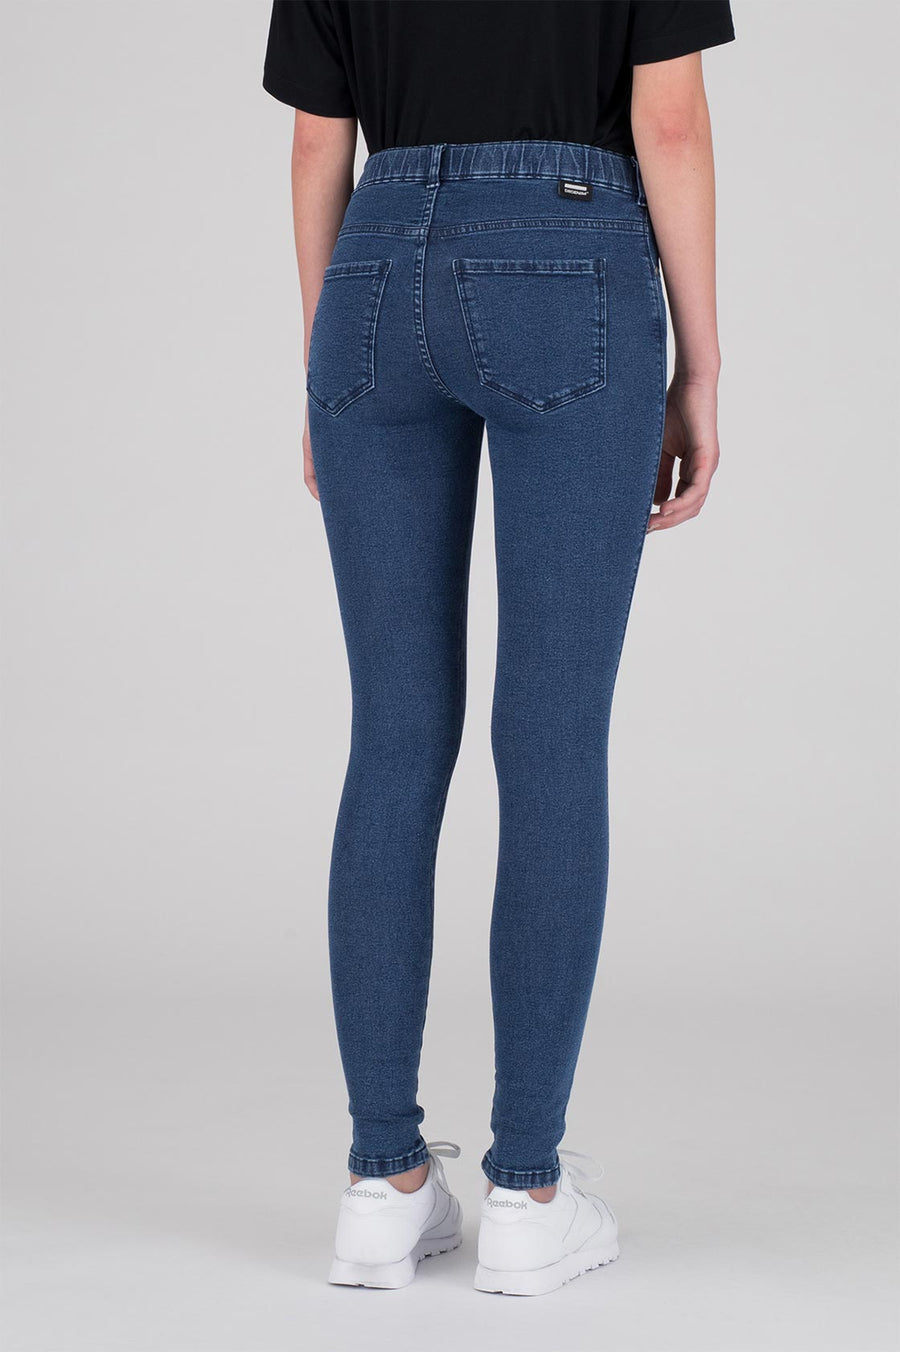 Lexy Skinny Jeans - Pure Dark Blue - Final Sale – Dr Jeans - Australia & NZ